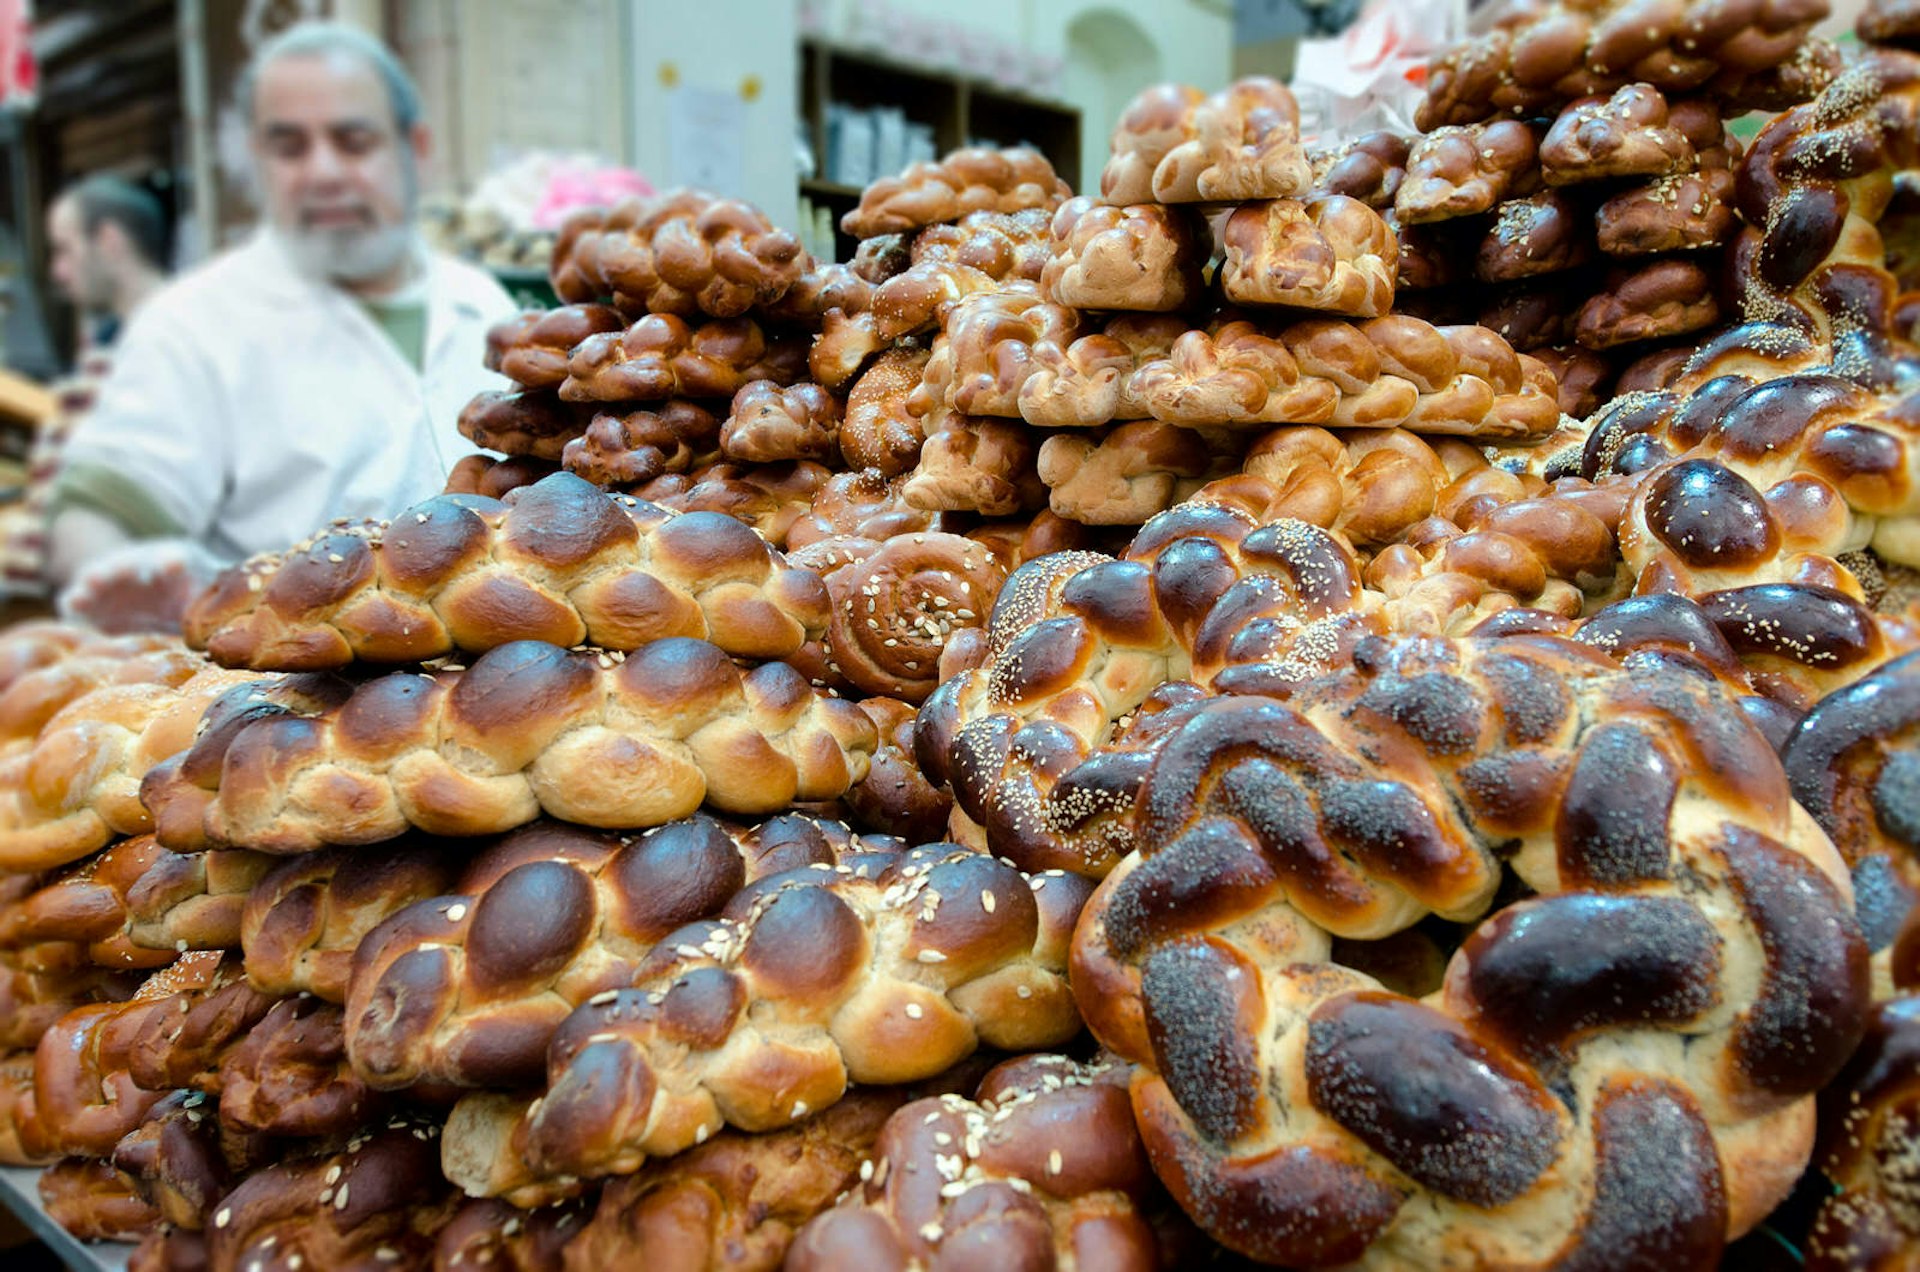 Jewish man buys challah bread for Shabbat at Mahane Yehuda Market, Jerusalem